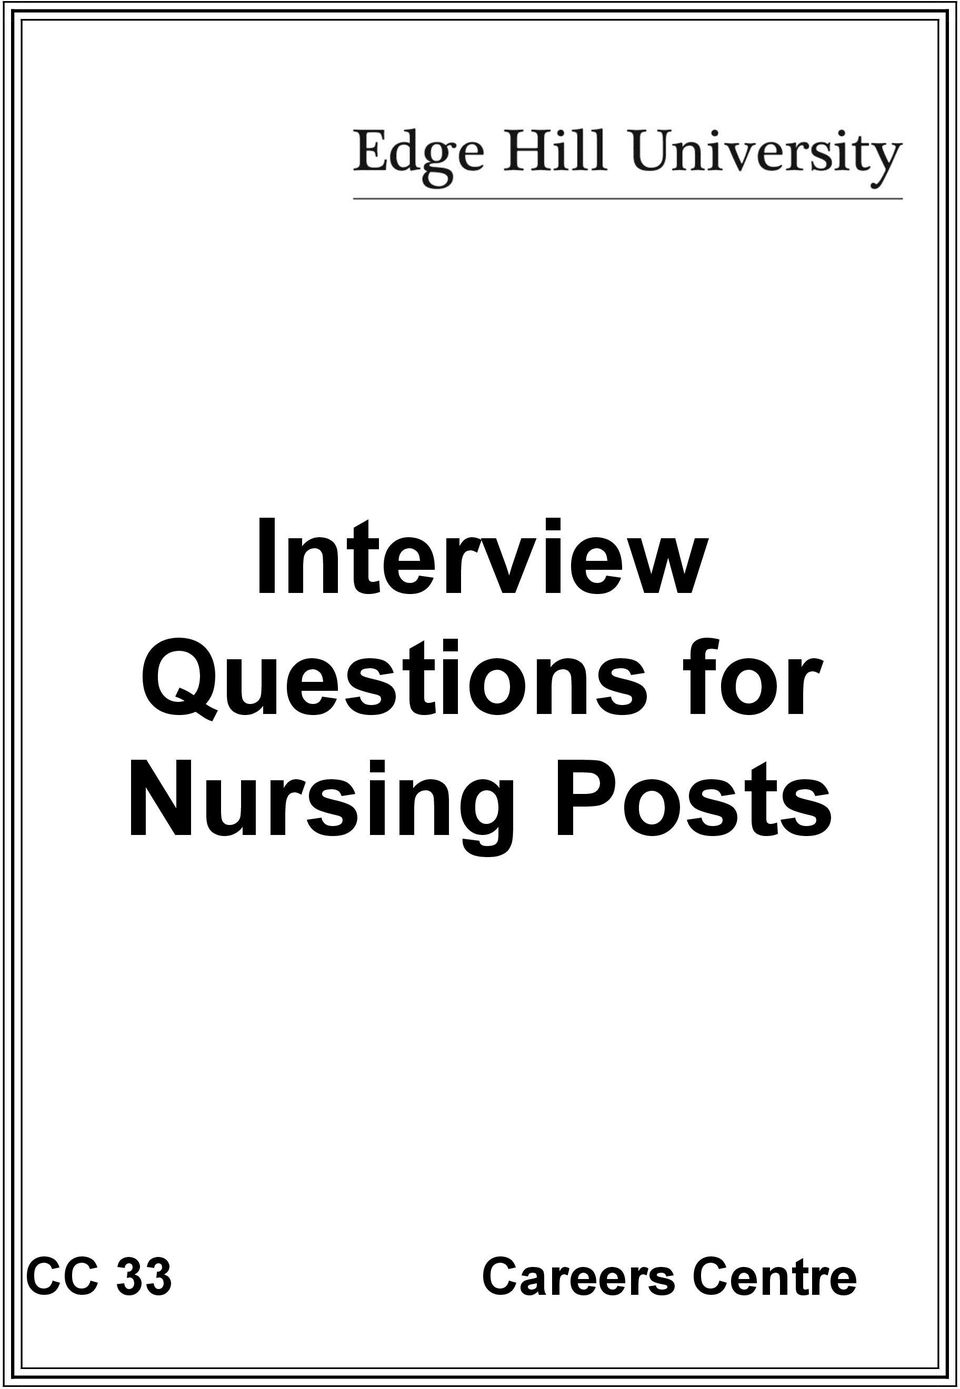 Nursing Posts